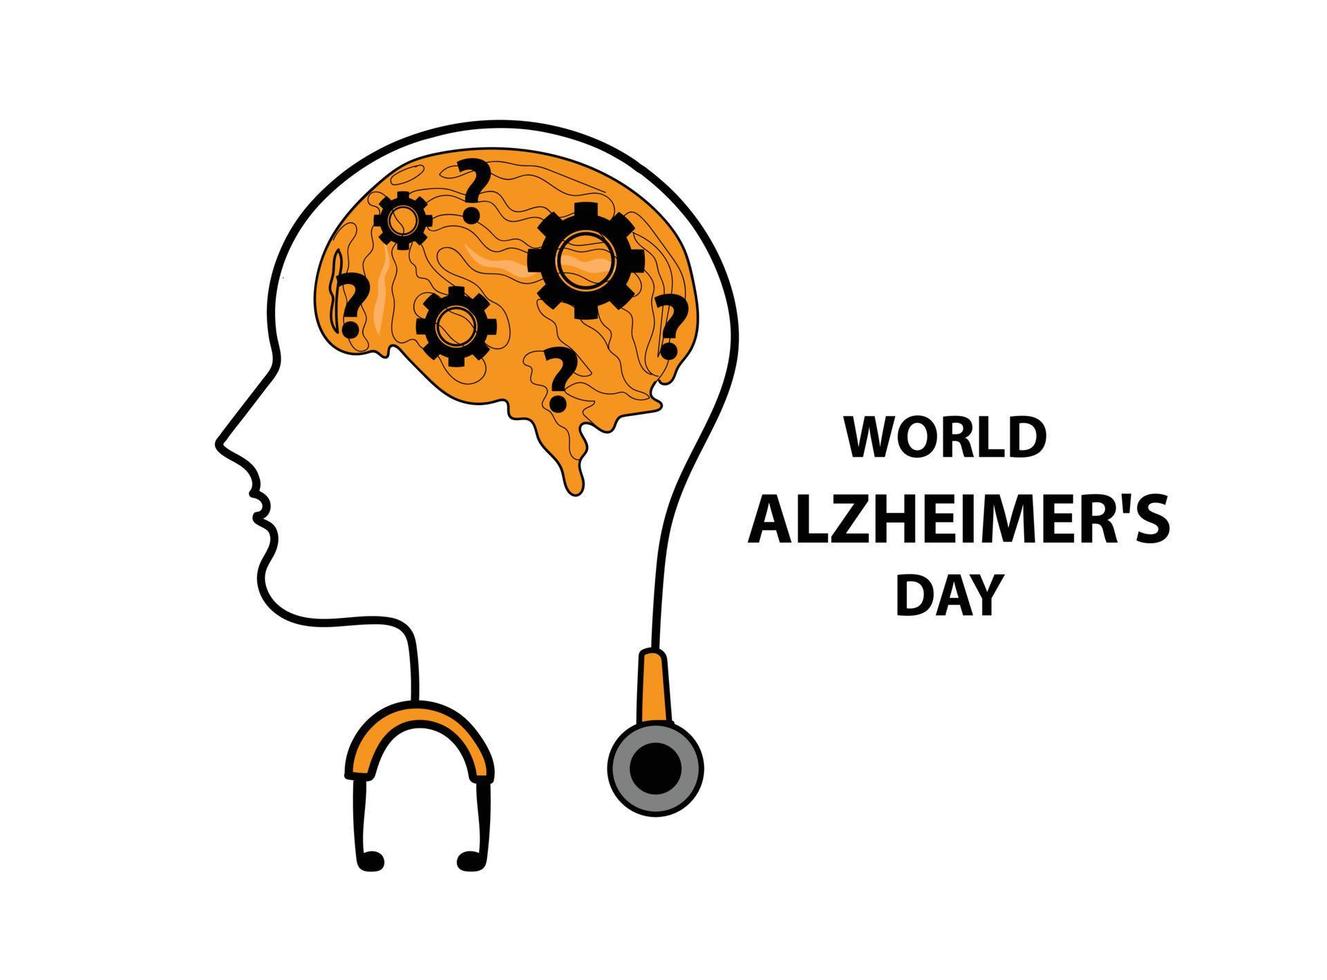 World Alzheimer's day vector illustration of human head